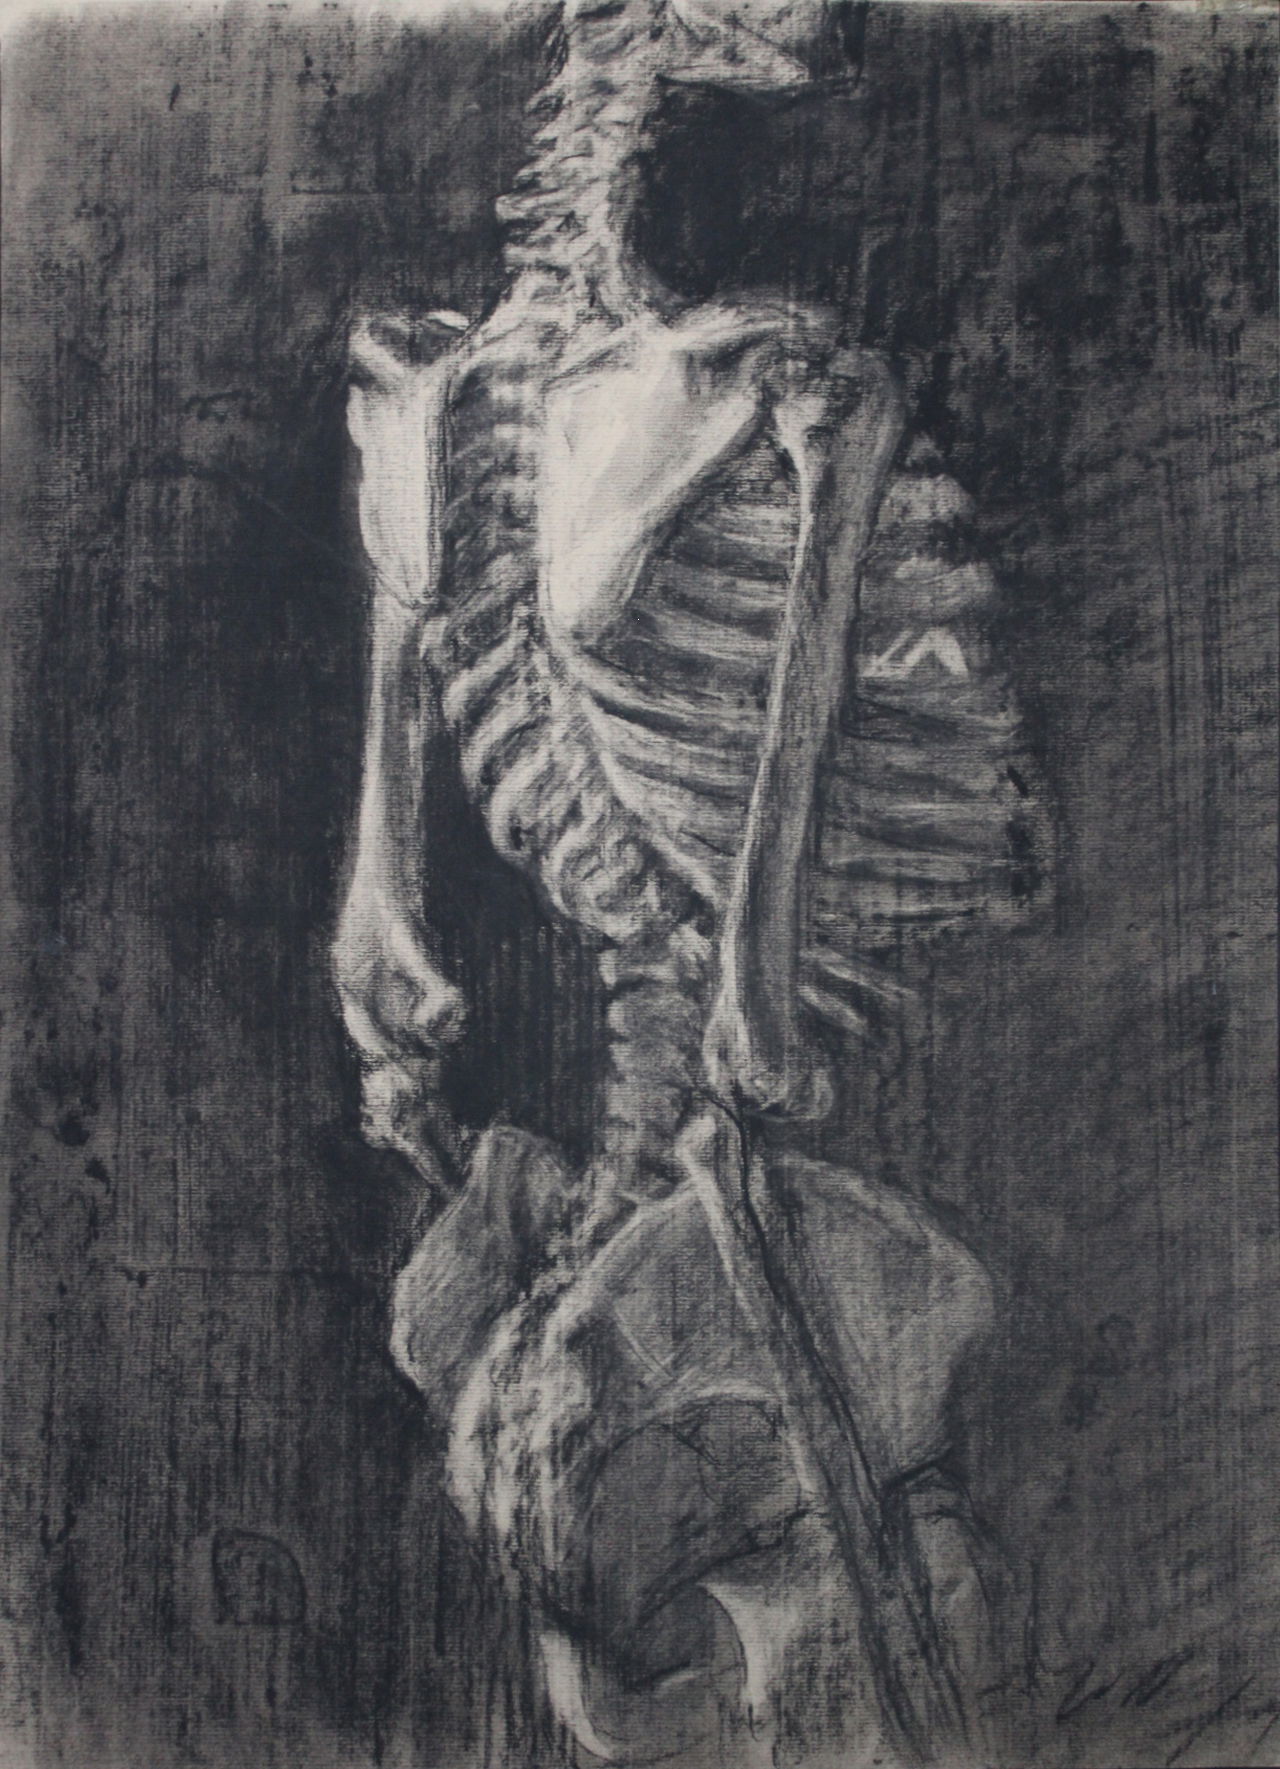 Anatomical study of a skeleton, No. 2, 2000